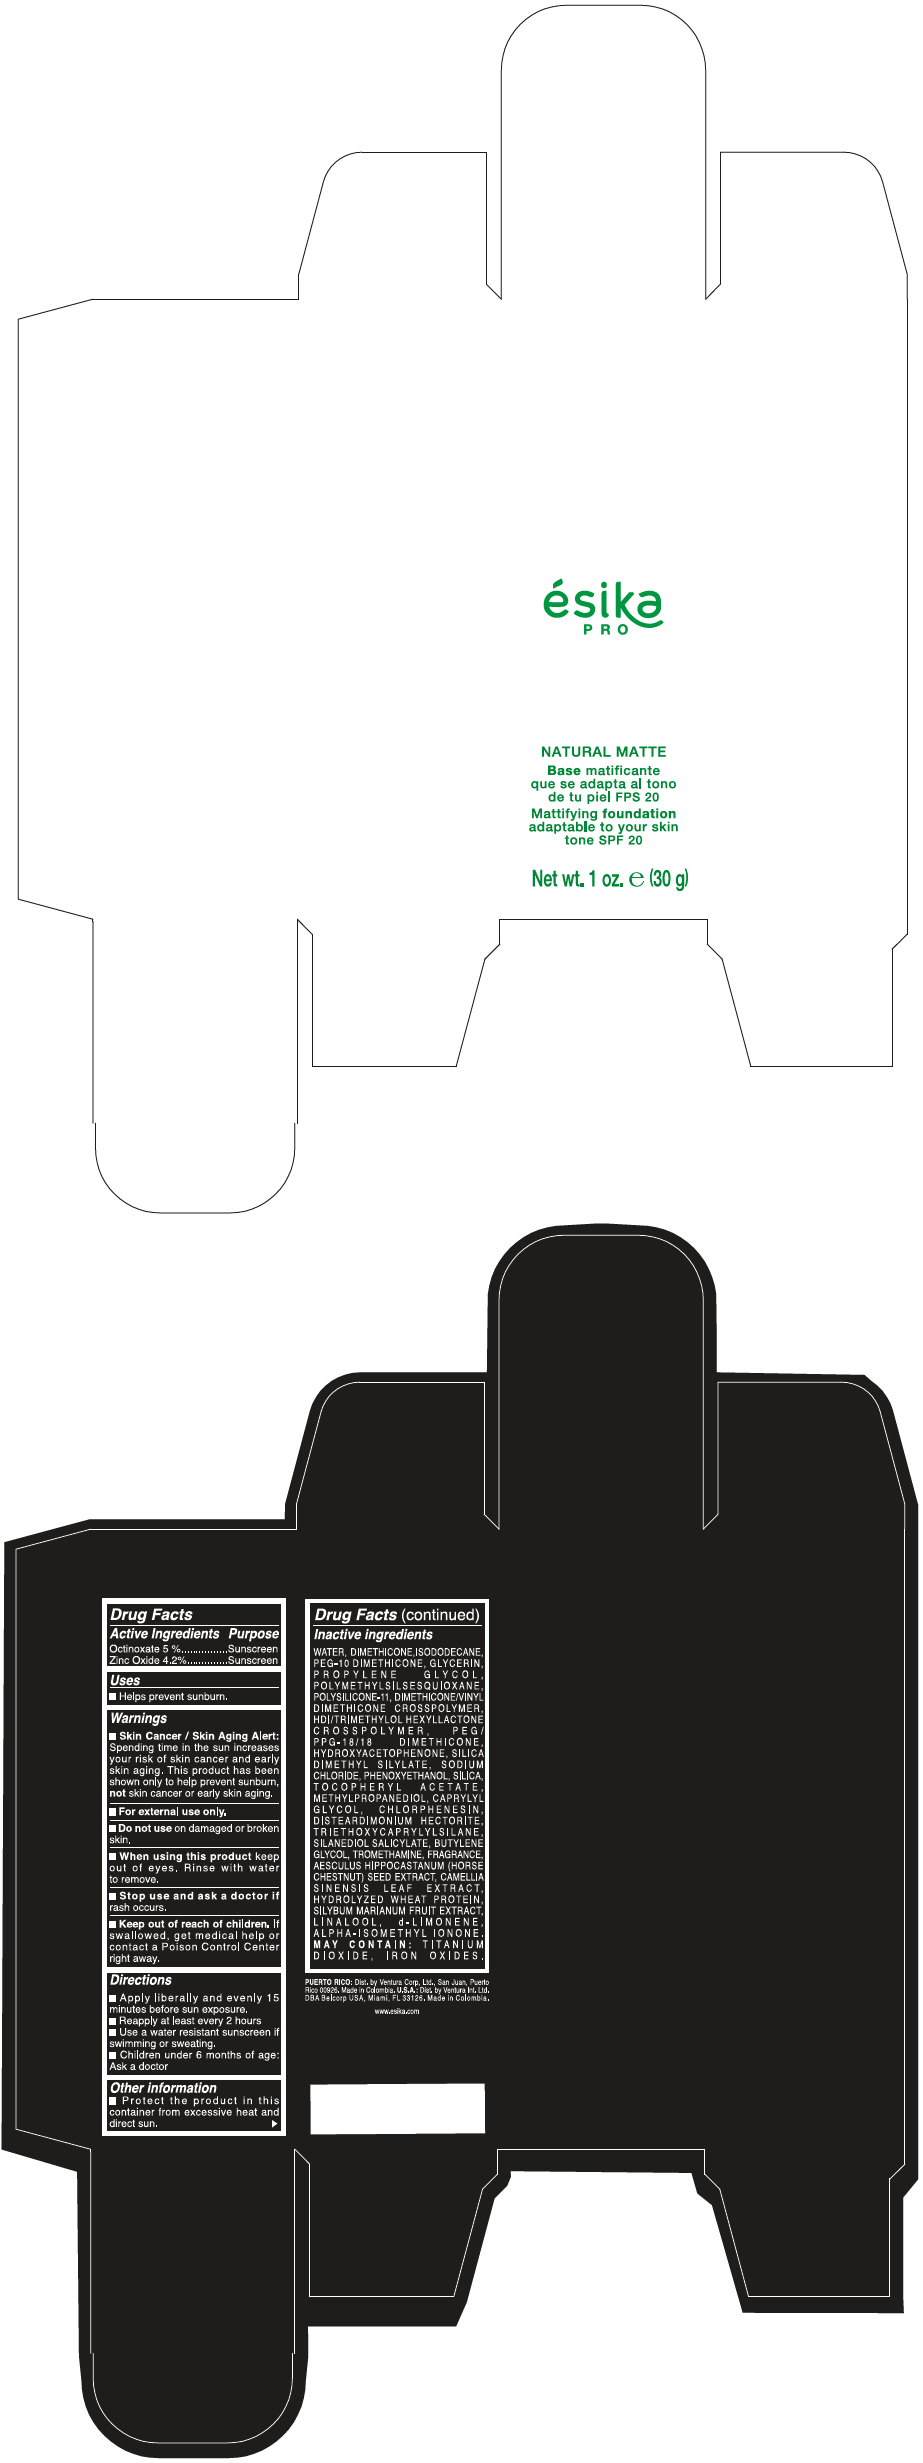 PRINCIPAL DISPLAY PANEL - 30 g Bottle Box - Claro 2/Beige